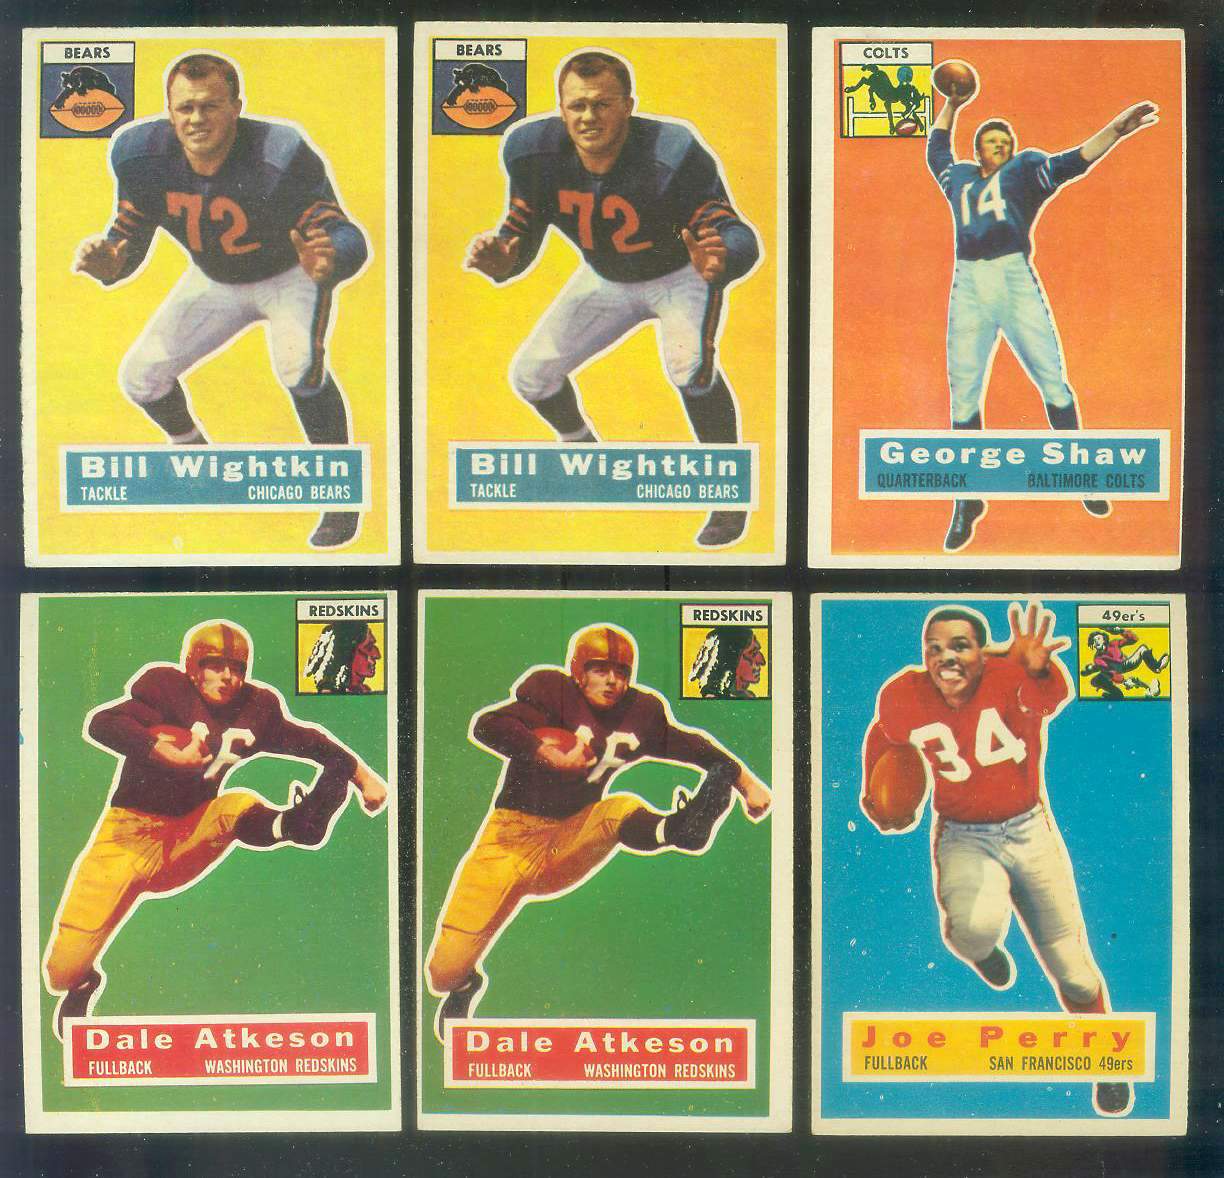 1956 Topps FB #109 Dale Atkeson SHORT PRINT (Redskins) Football cards value